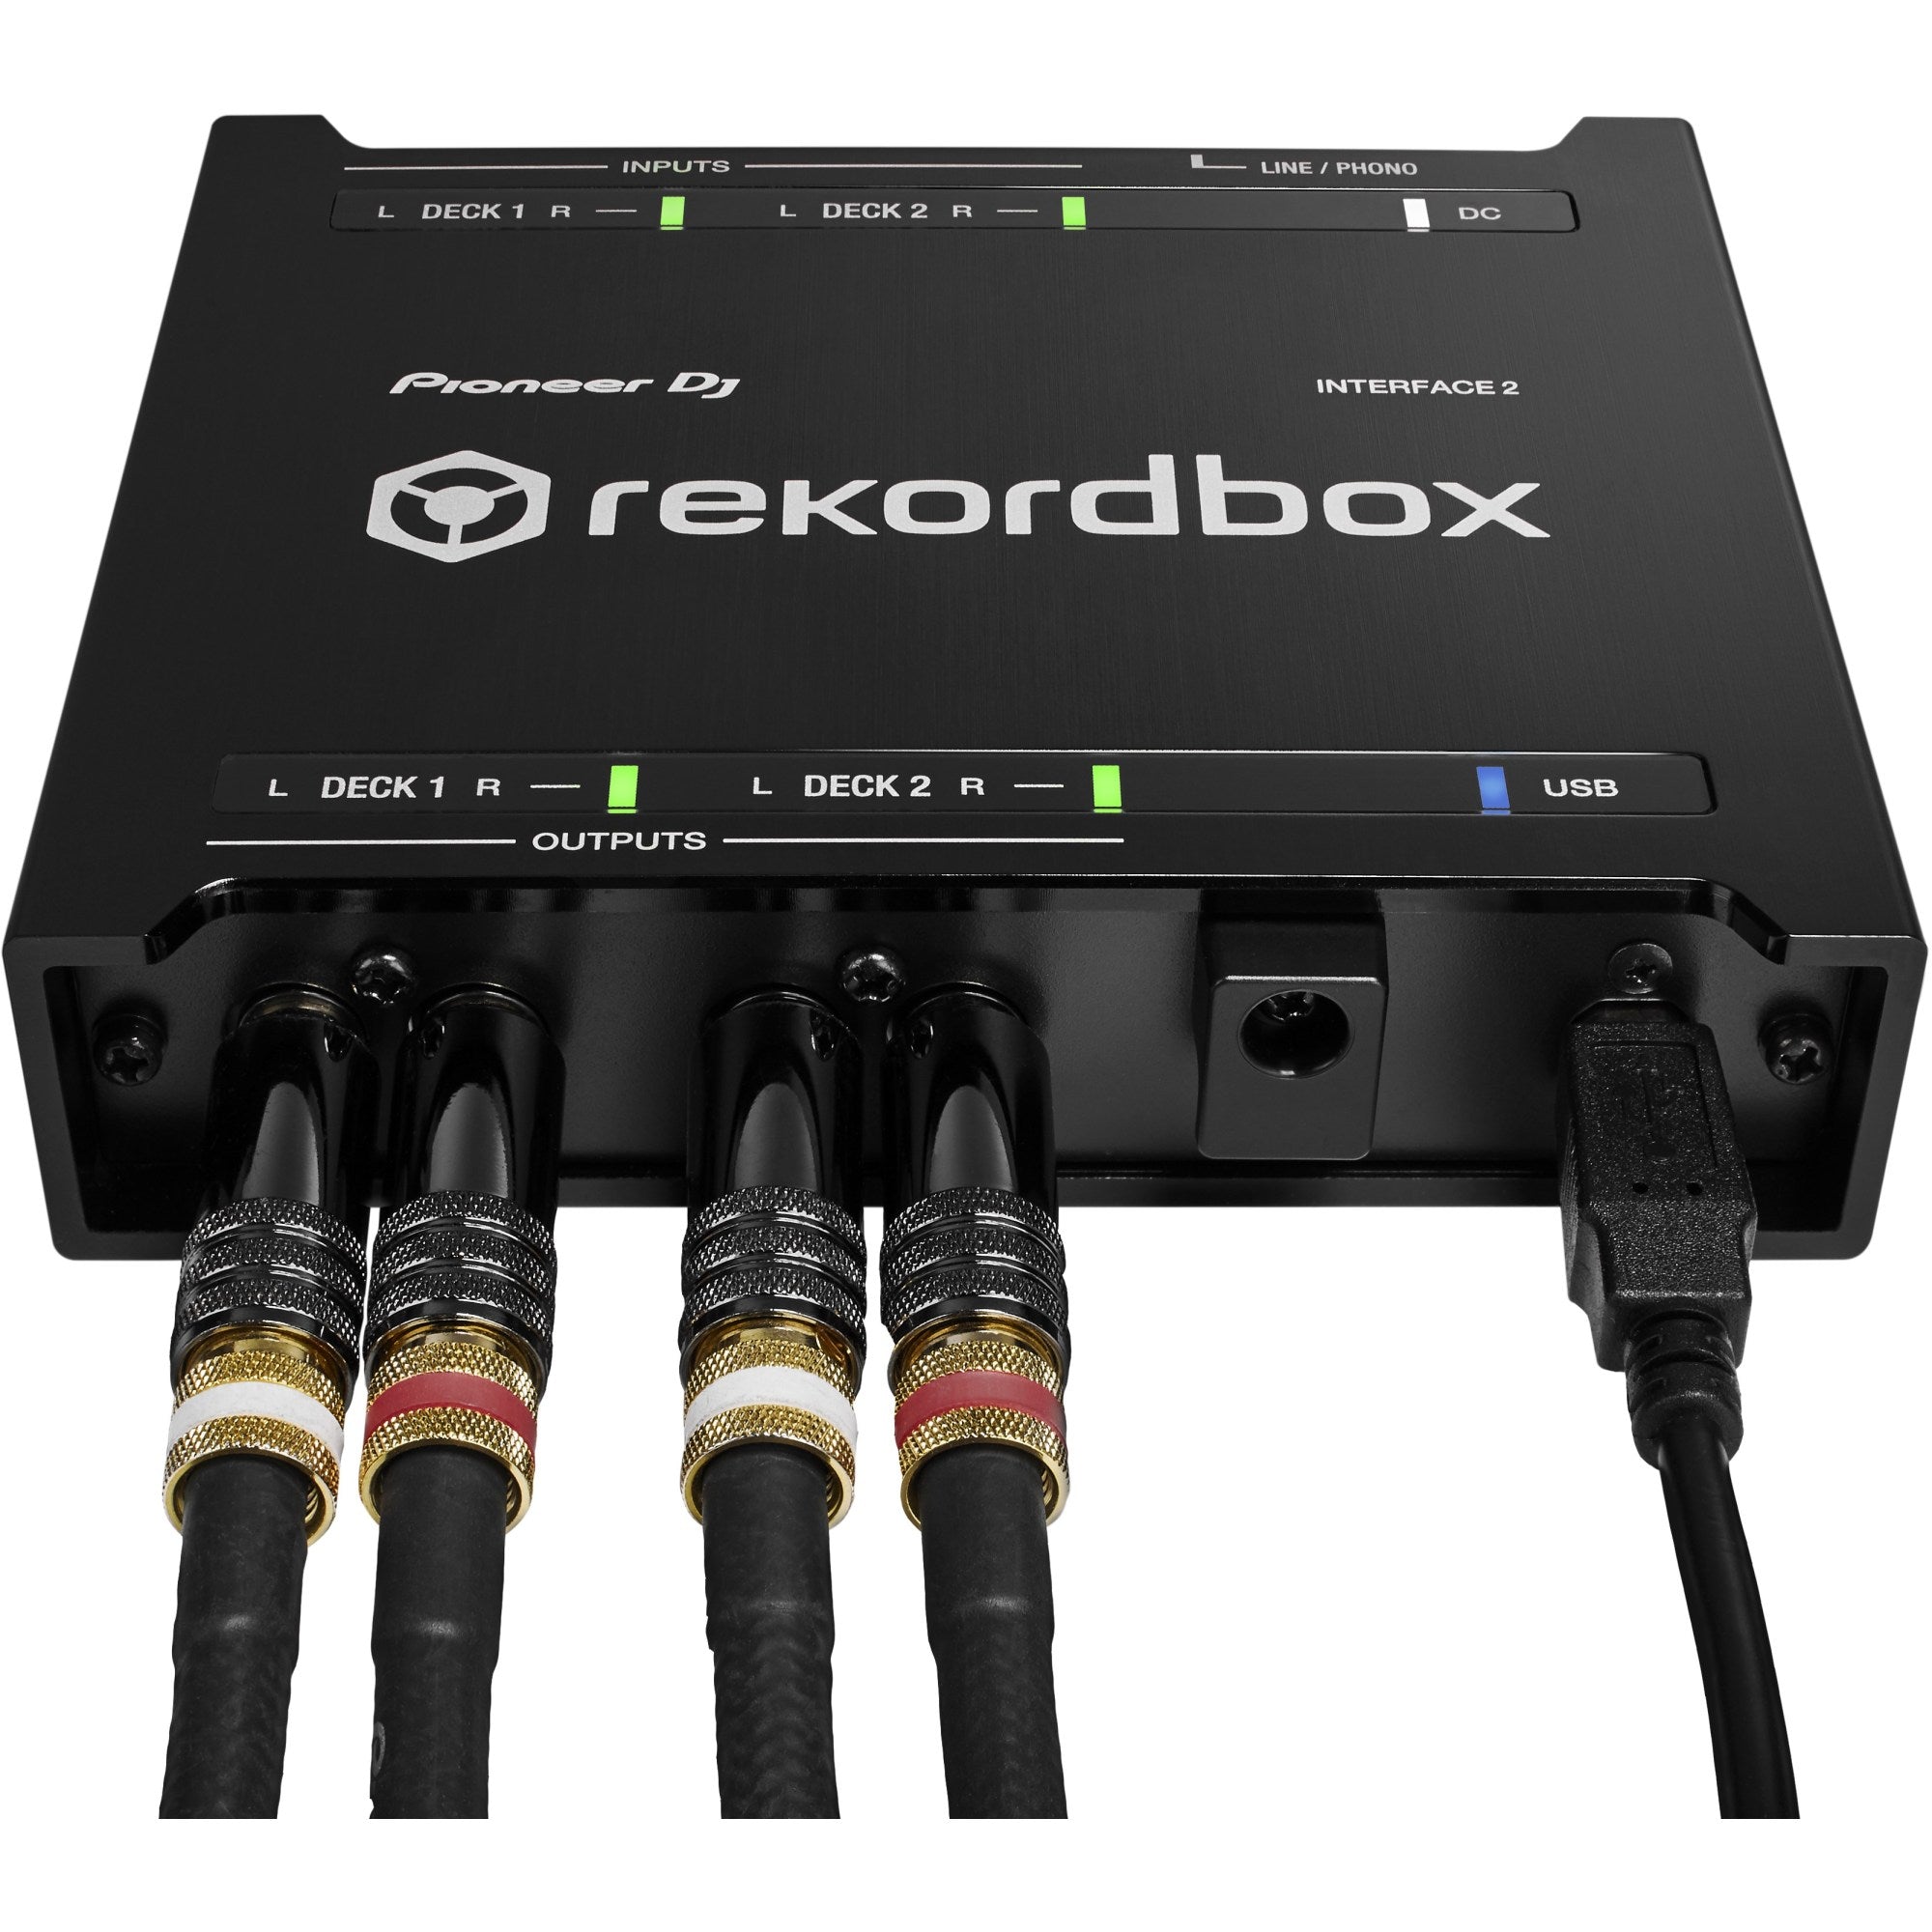 Pioneer DJ, Pioneer DJ INTERFACE2 2-Channel Audio Interface for Rekordbox DVS, Professional DJ Equipment, Control Audio DJ Set from Booth